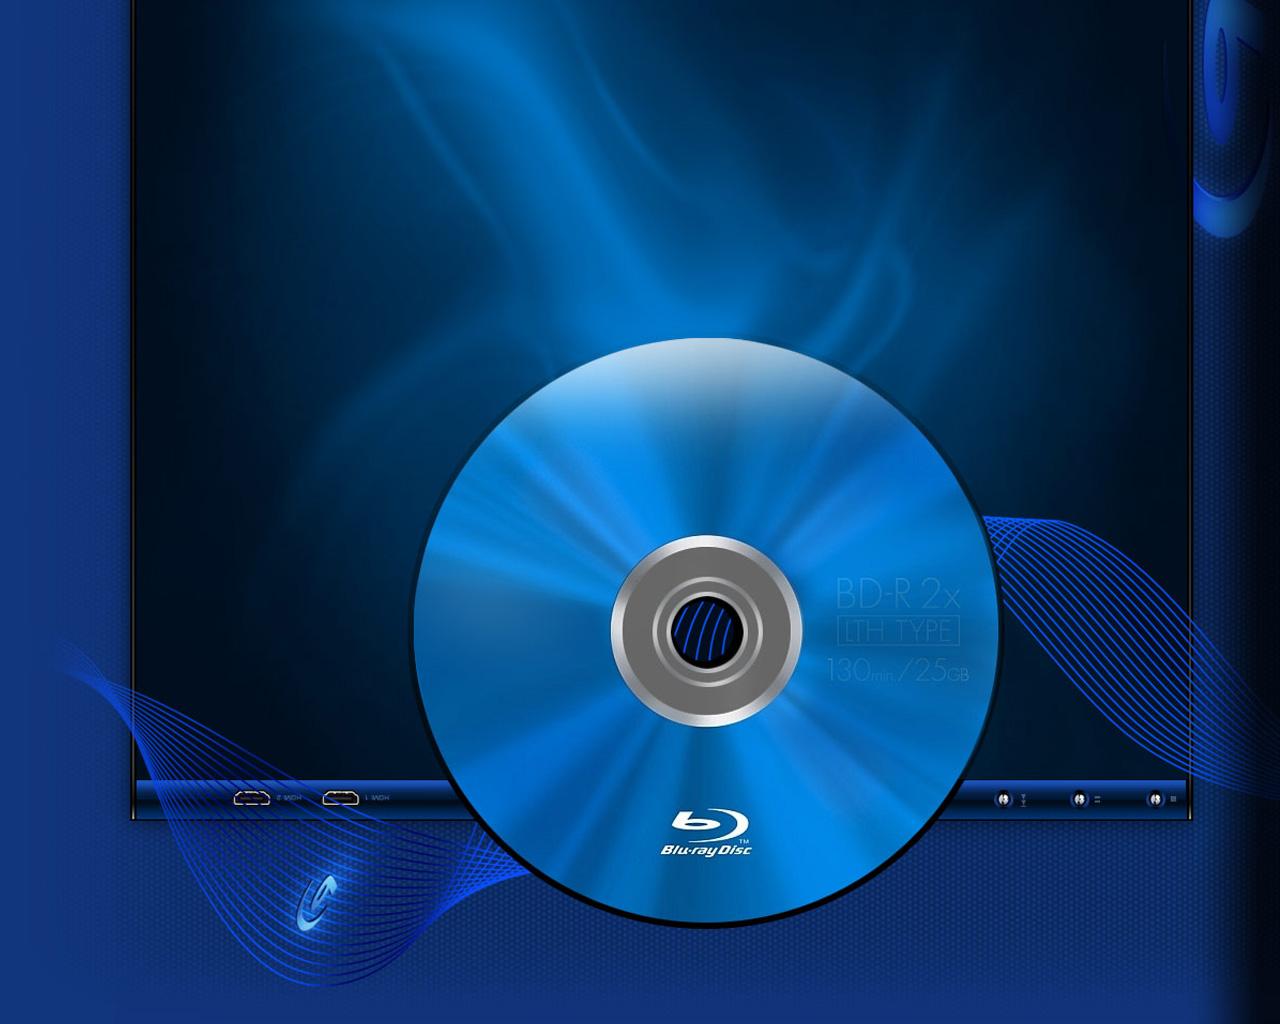 Bluray Disc # 1280x1024. All For Desktop